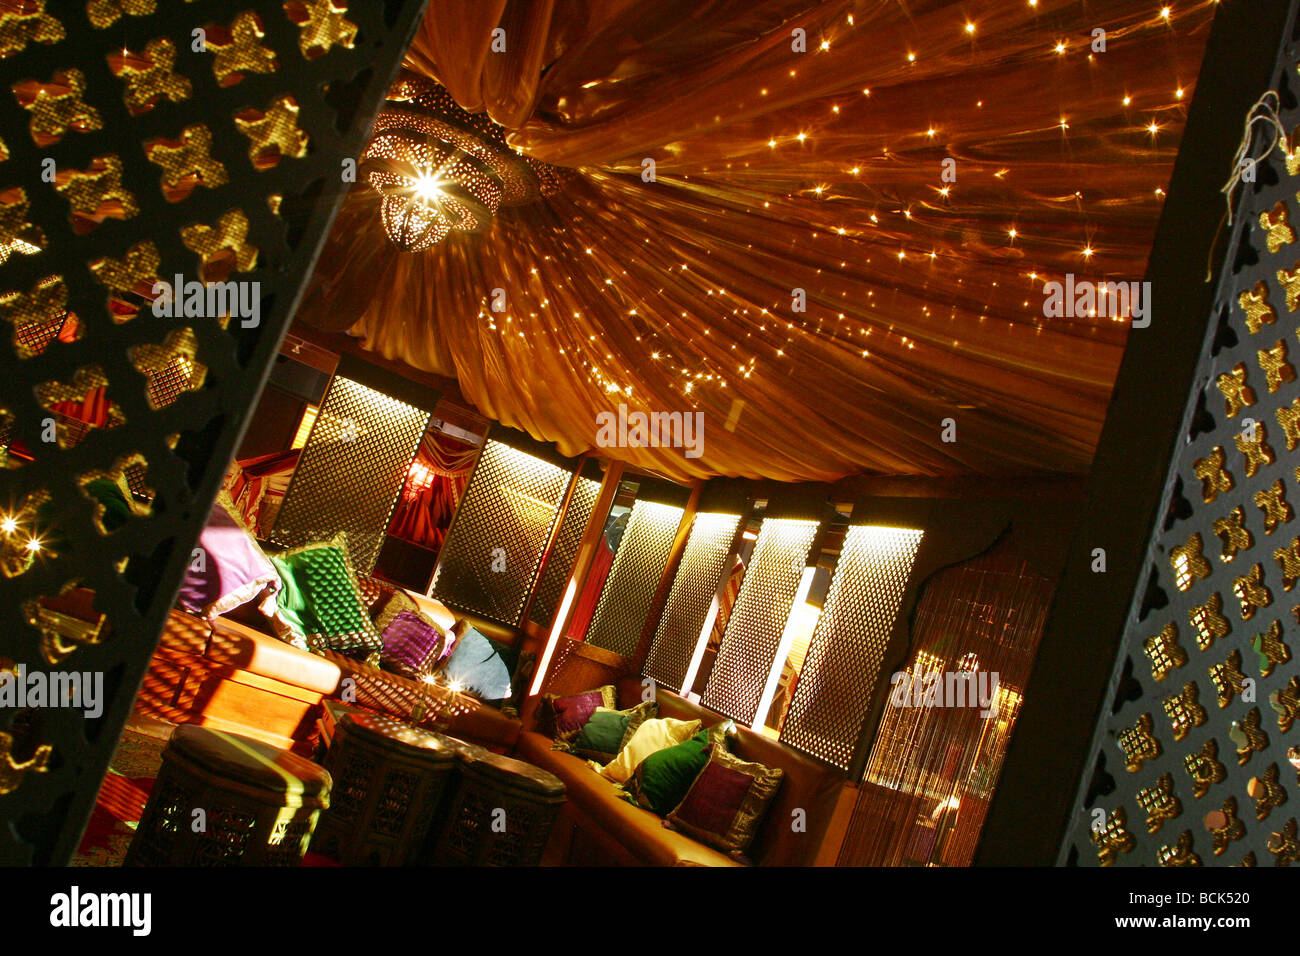 Bambu nightclub, Birmingham, moroccan theme, moroccan interiors, Stock Photo